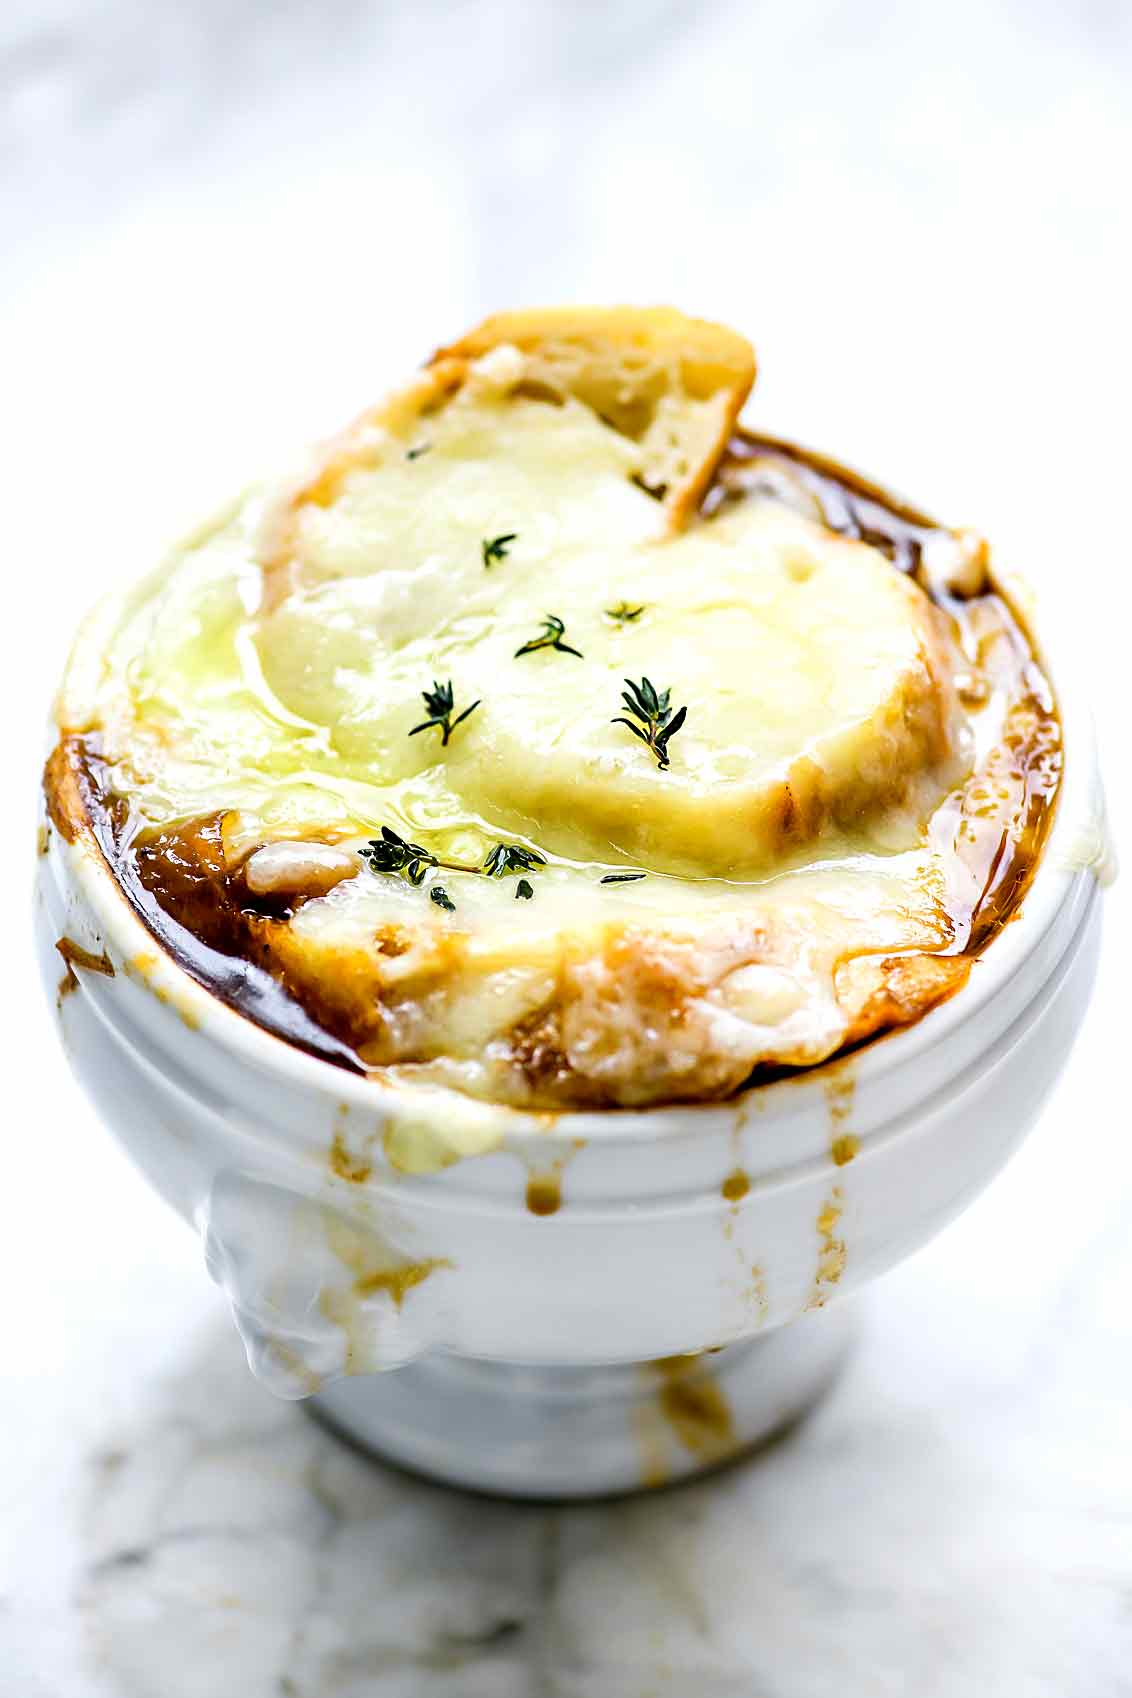 A Melhor Sopa de Cebola Francesa | foodiecrush.com #easy #rcipe #best #soup #soup #onion #frenchonion